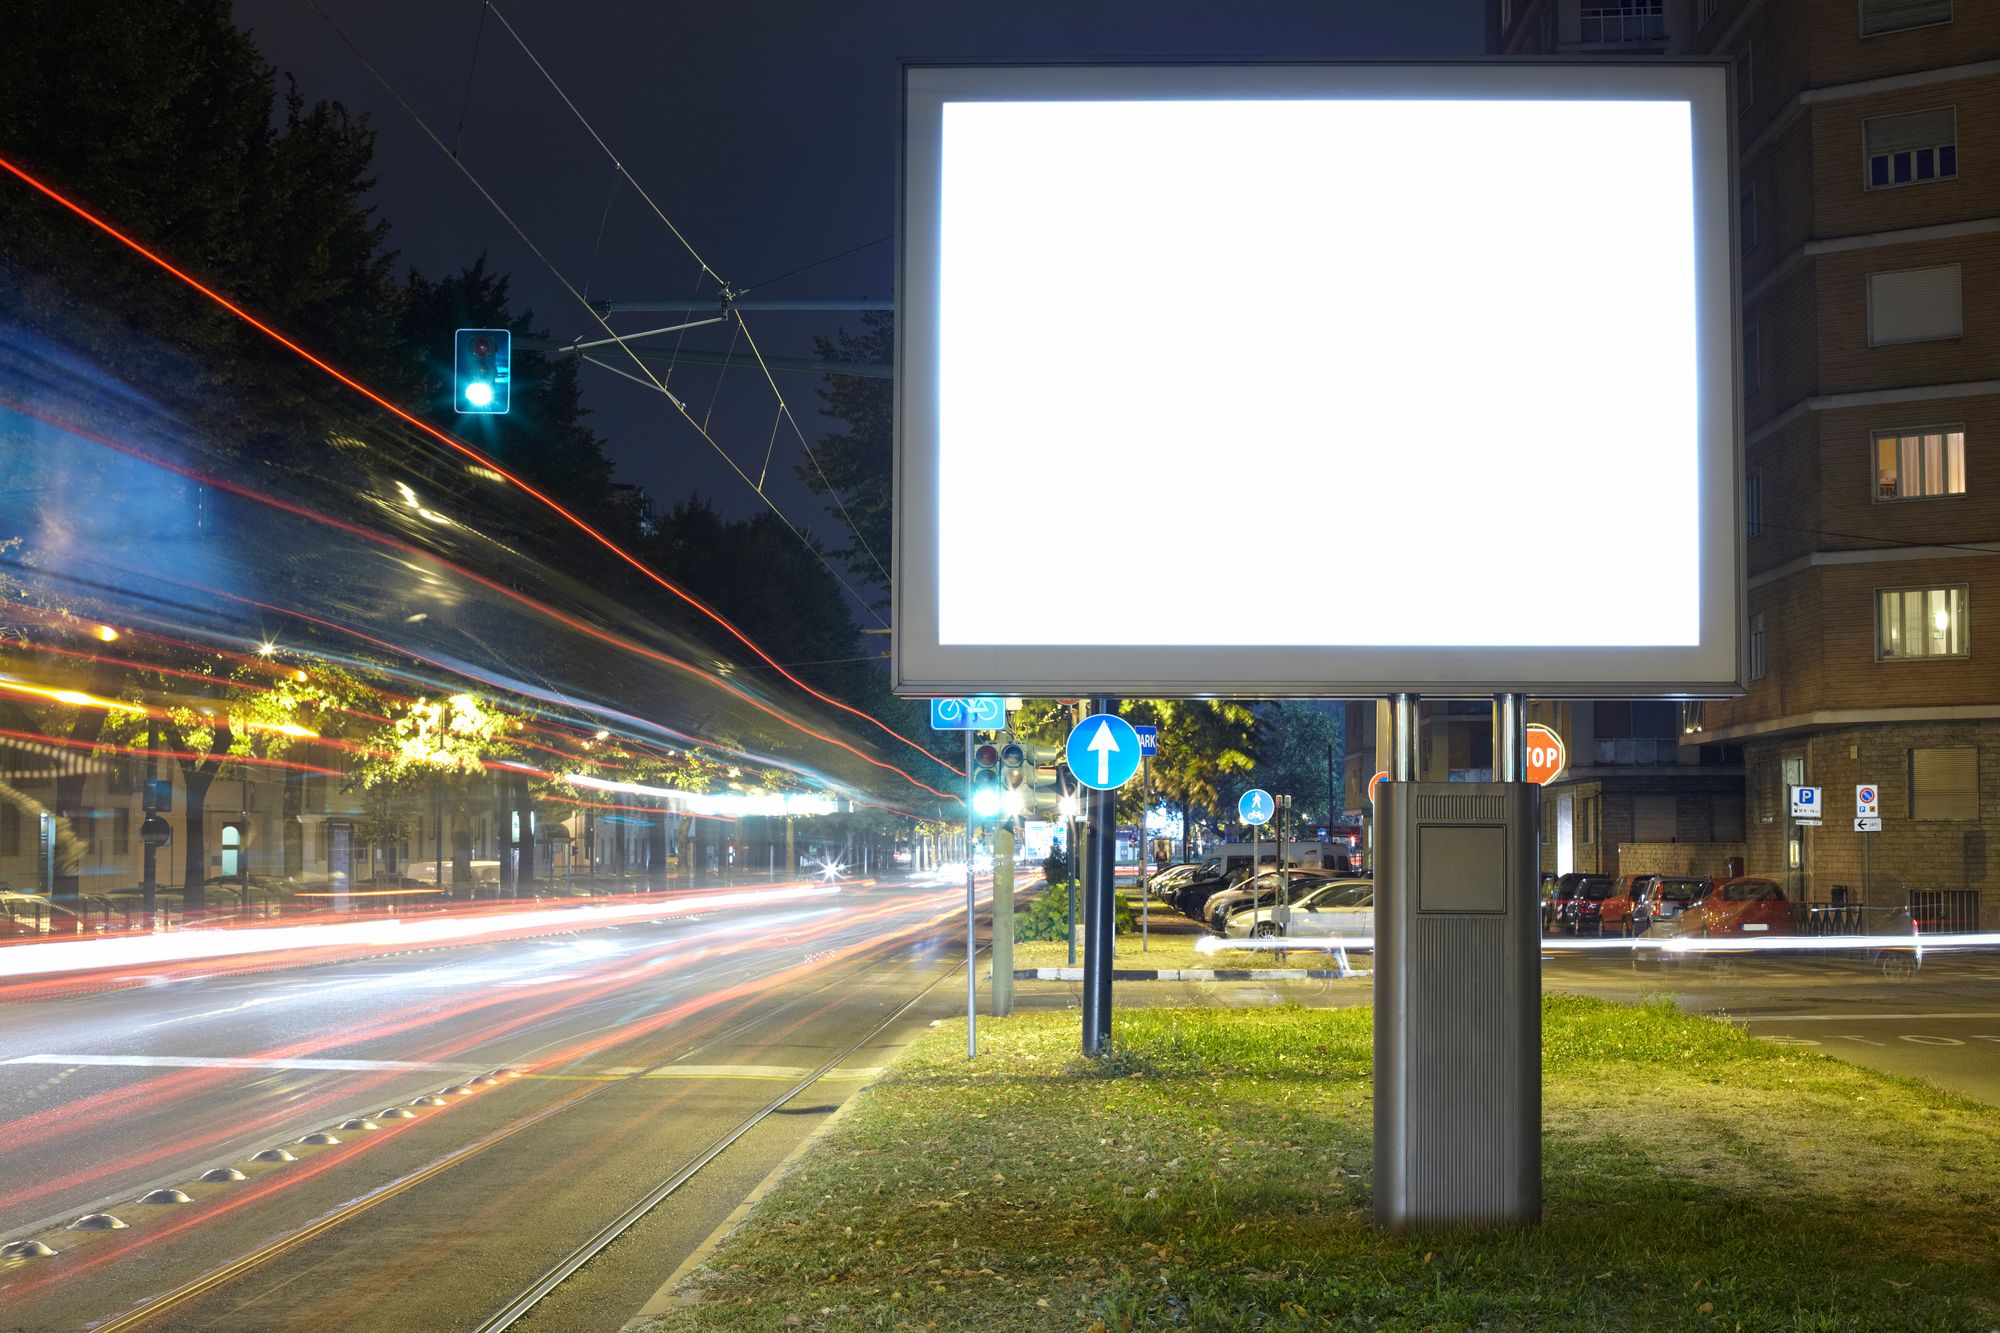 Werbe-Screens in Zürich müssen abgebaut werden